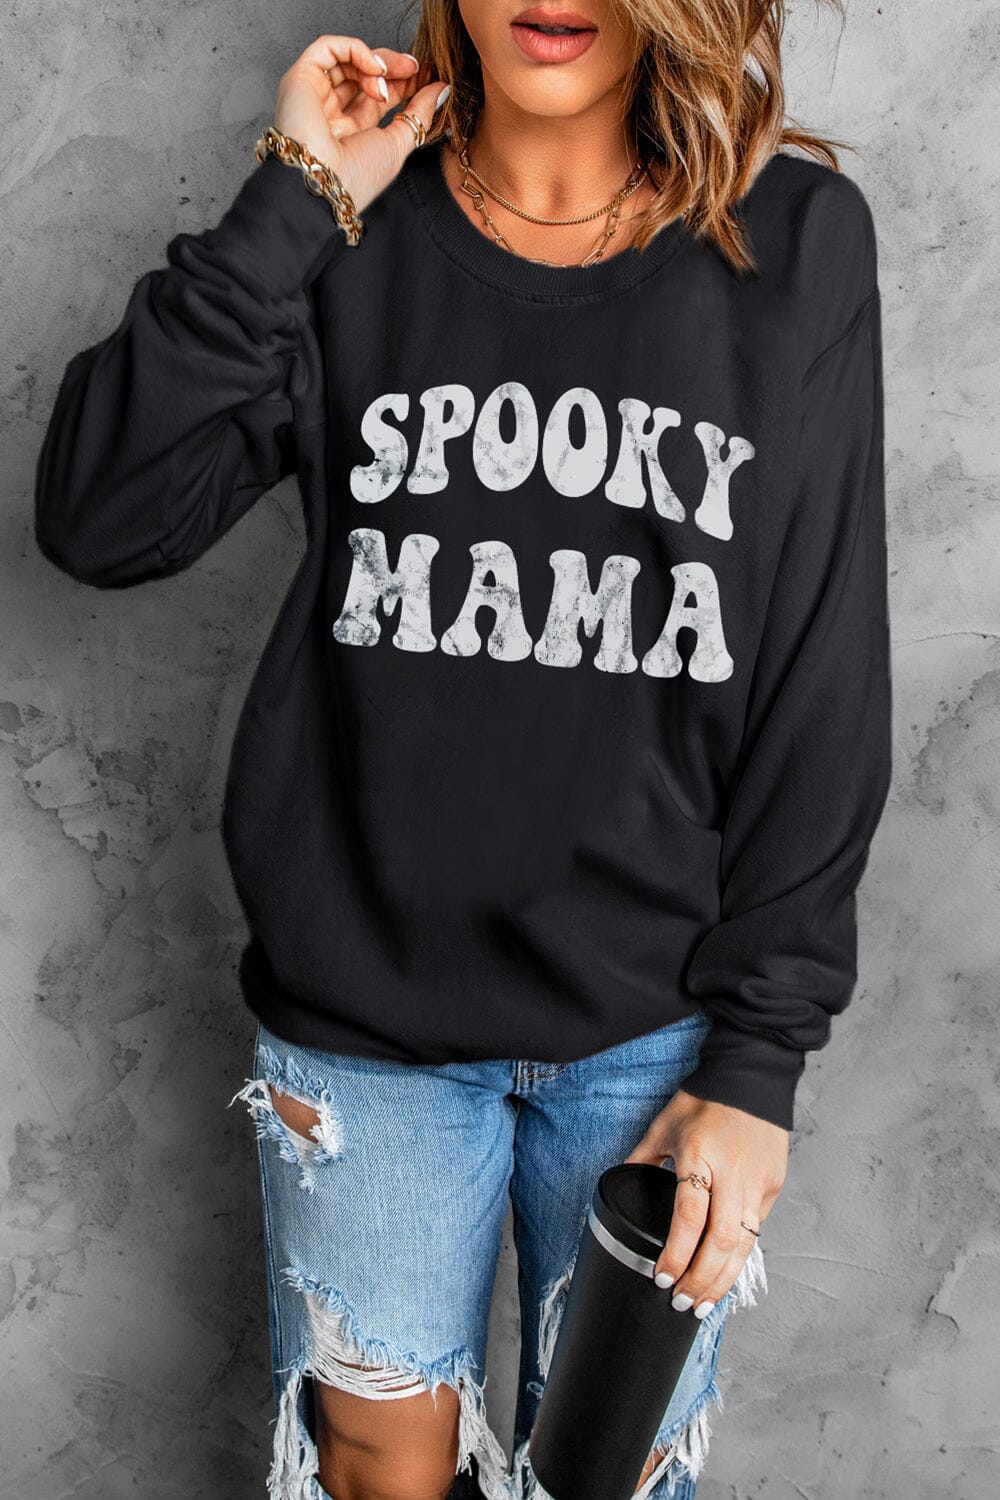 SPOOKY MAMA Graphic Sweatshirt - Sydney So Sweet